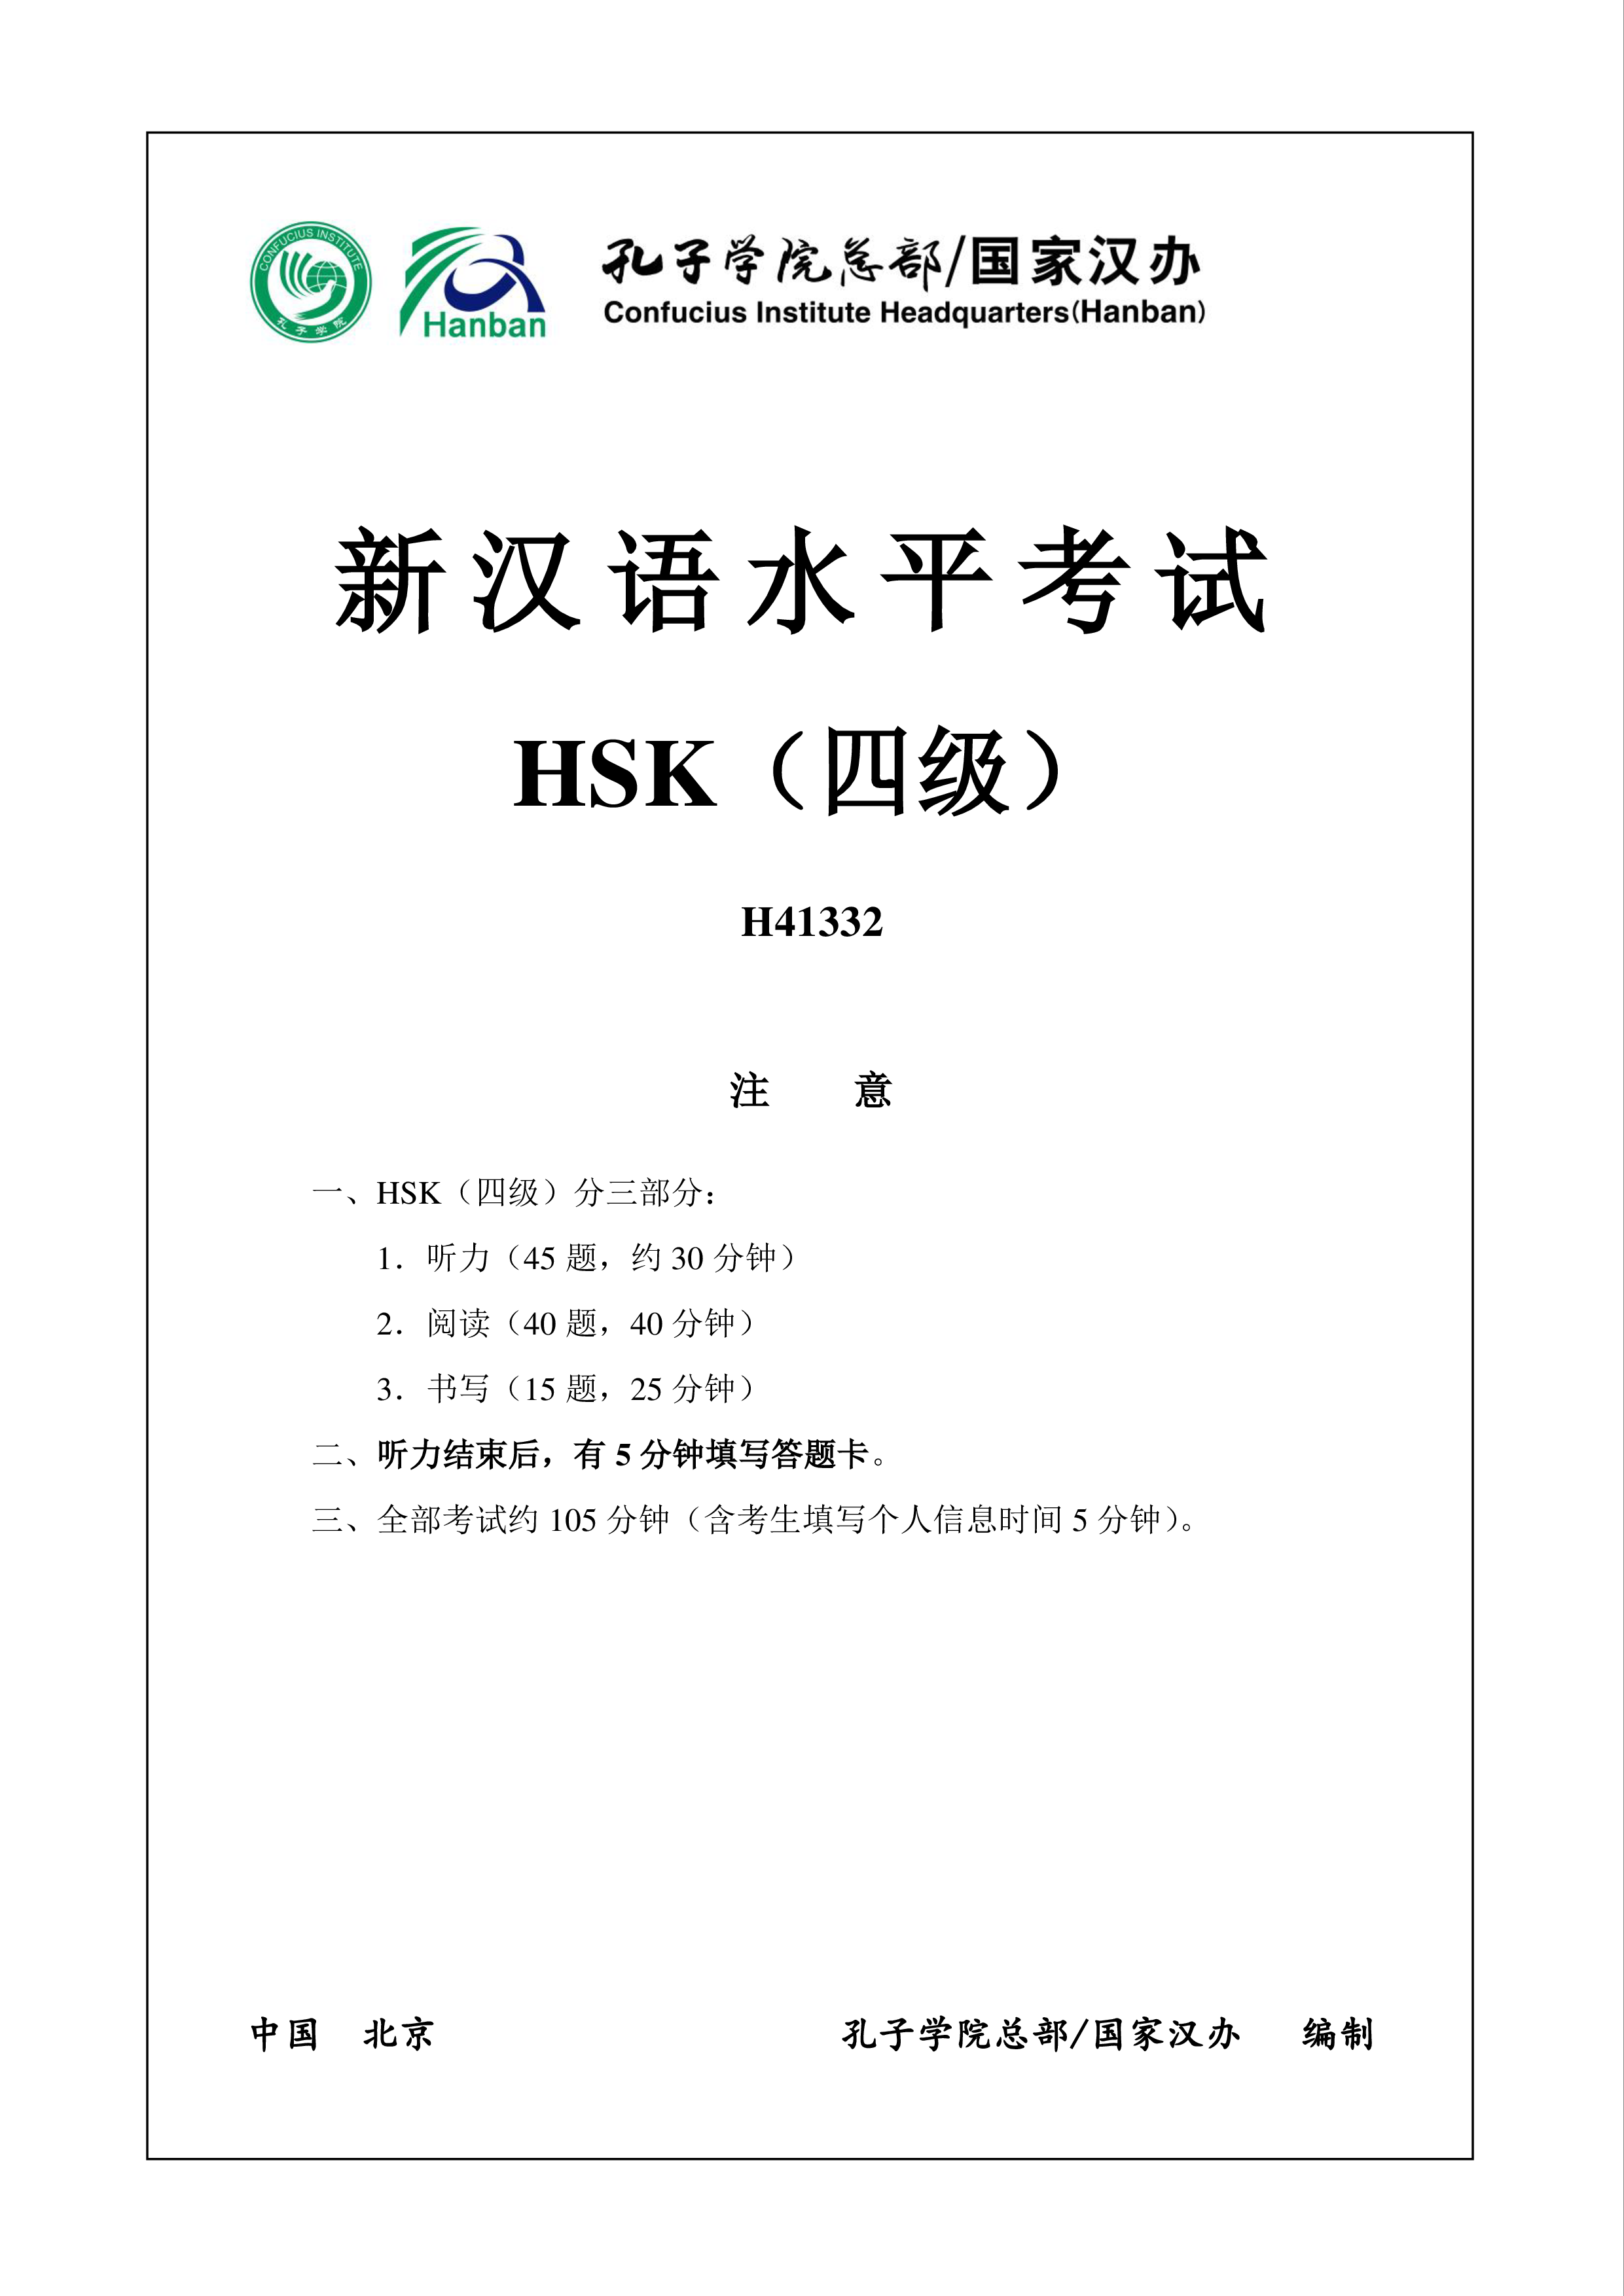 HSK4 Chinees Examen H41332 main image